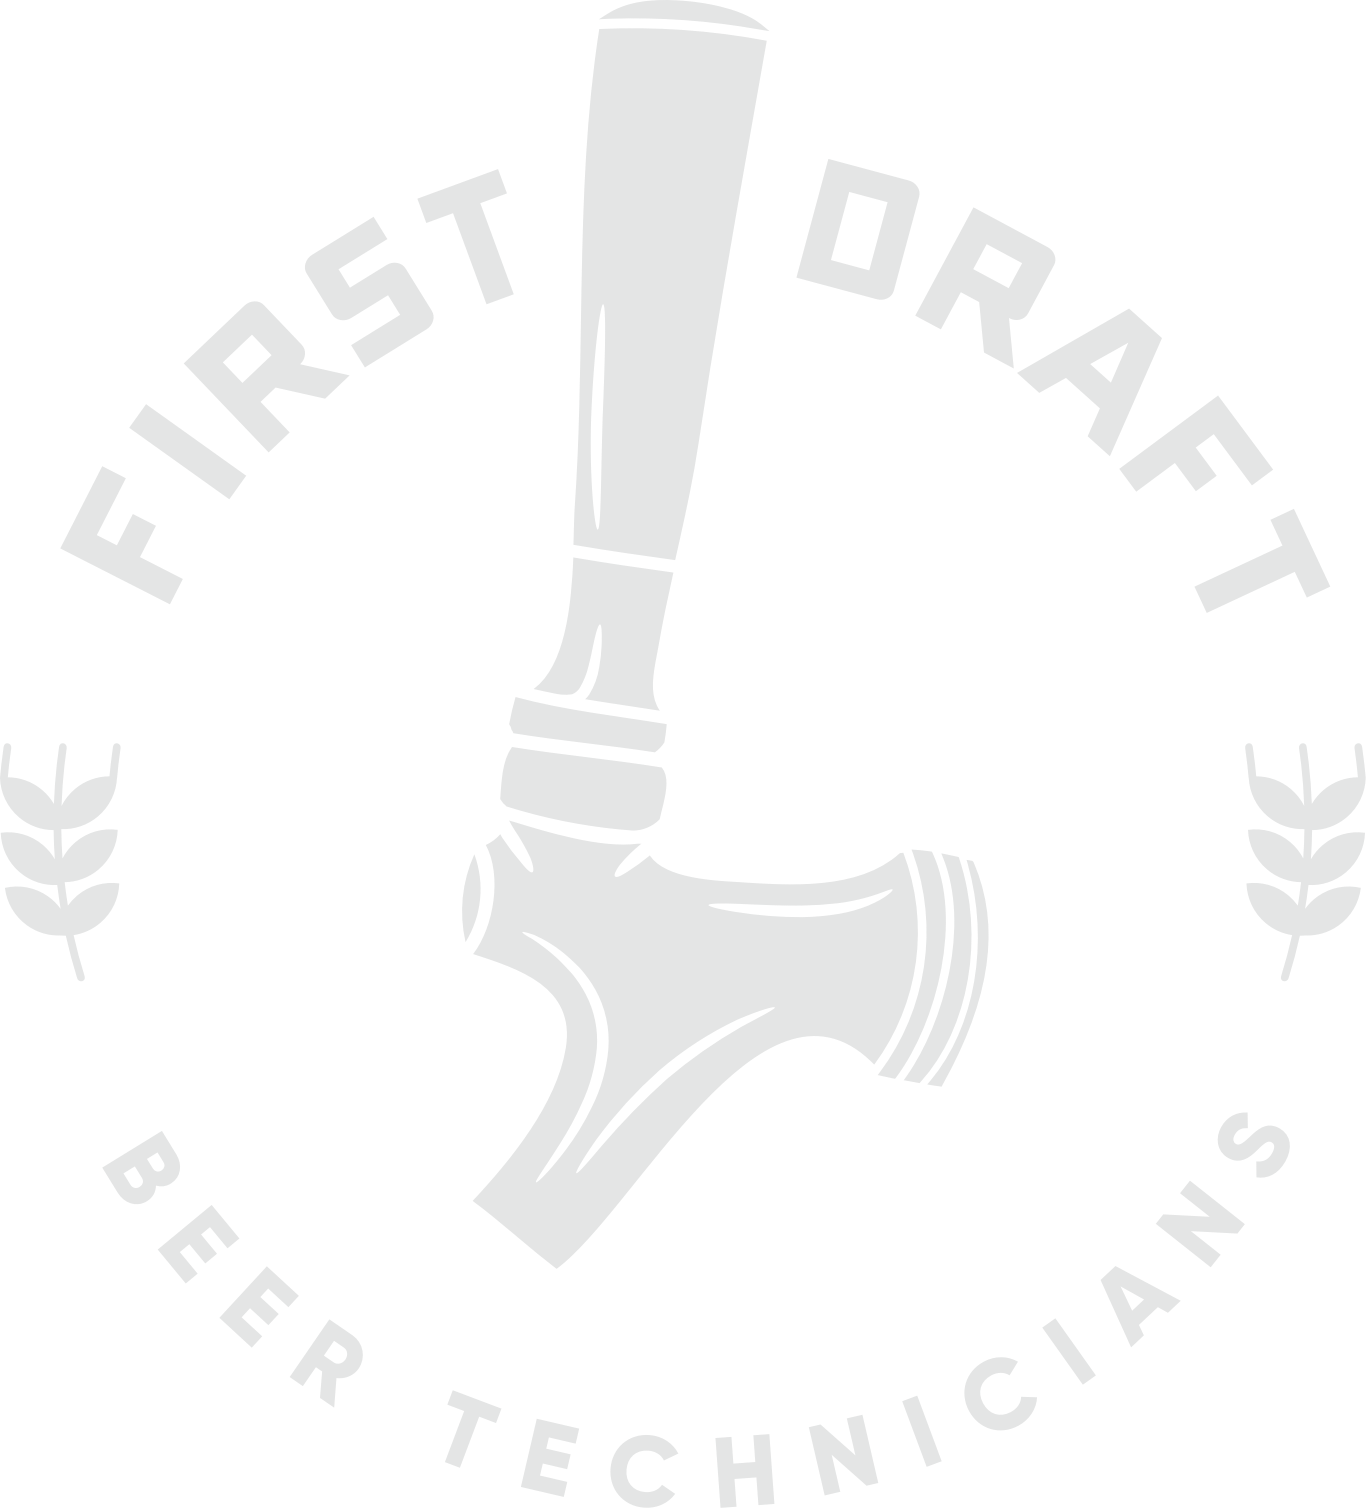 First Draft - Seattle Beer Technicians